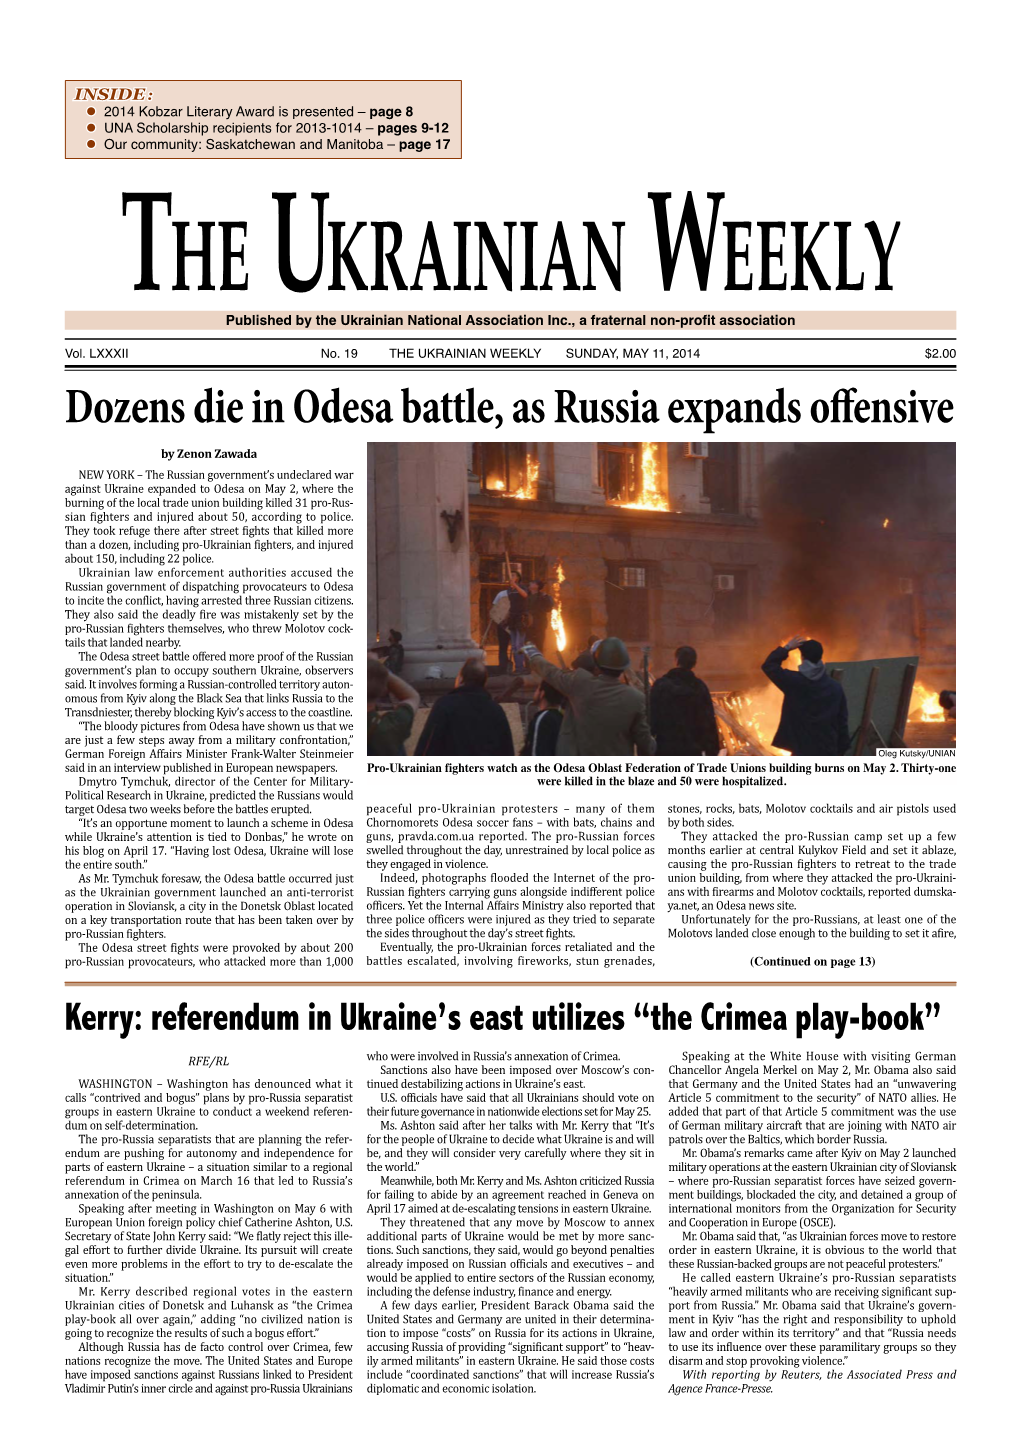 The Ukrainian Weekly 2014, No.19